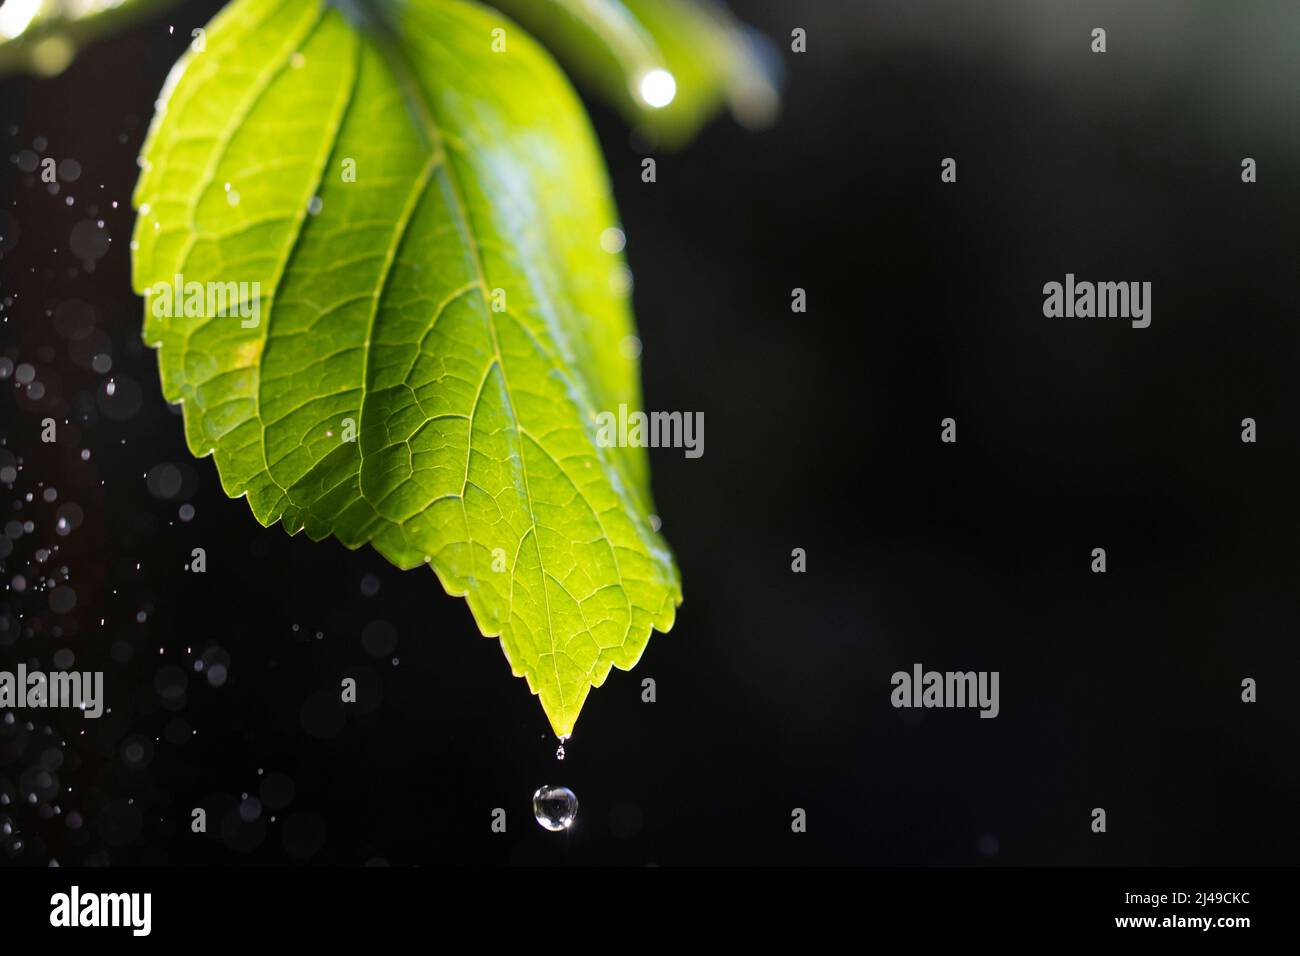 Raindrops falling onto a green leaf Stock Photo